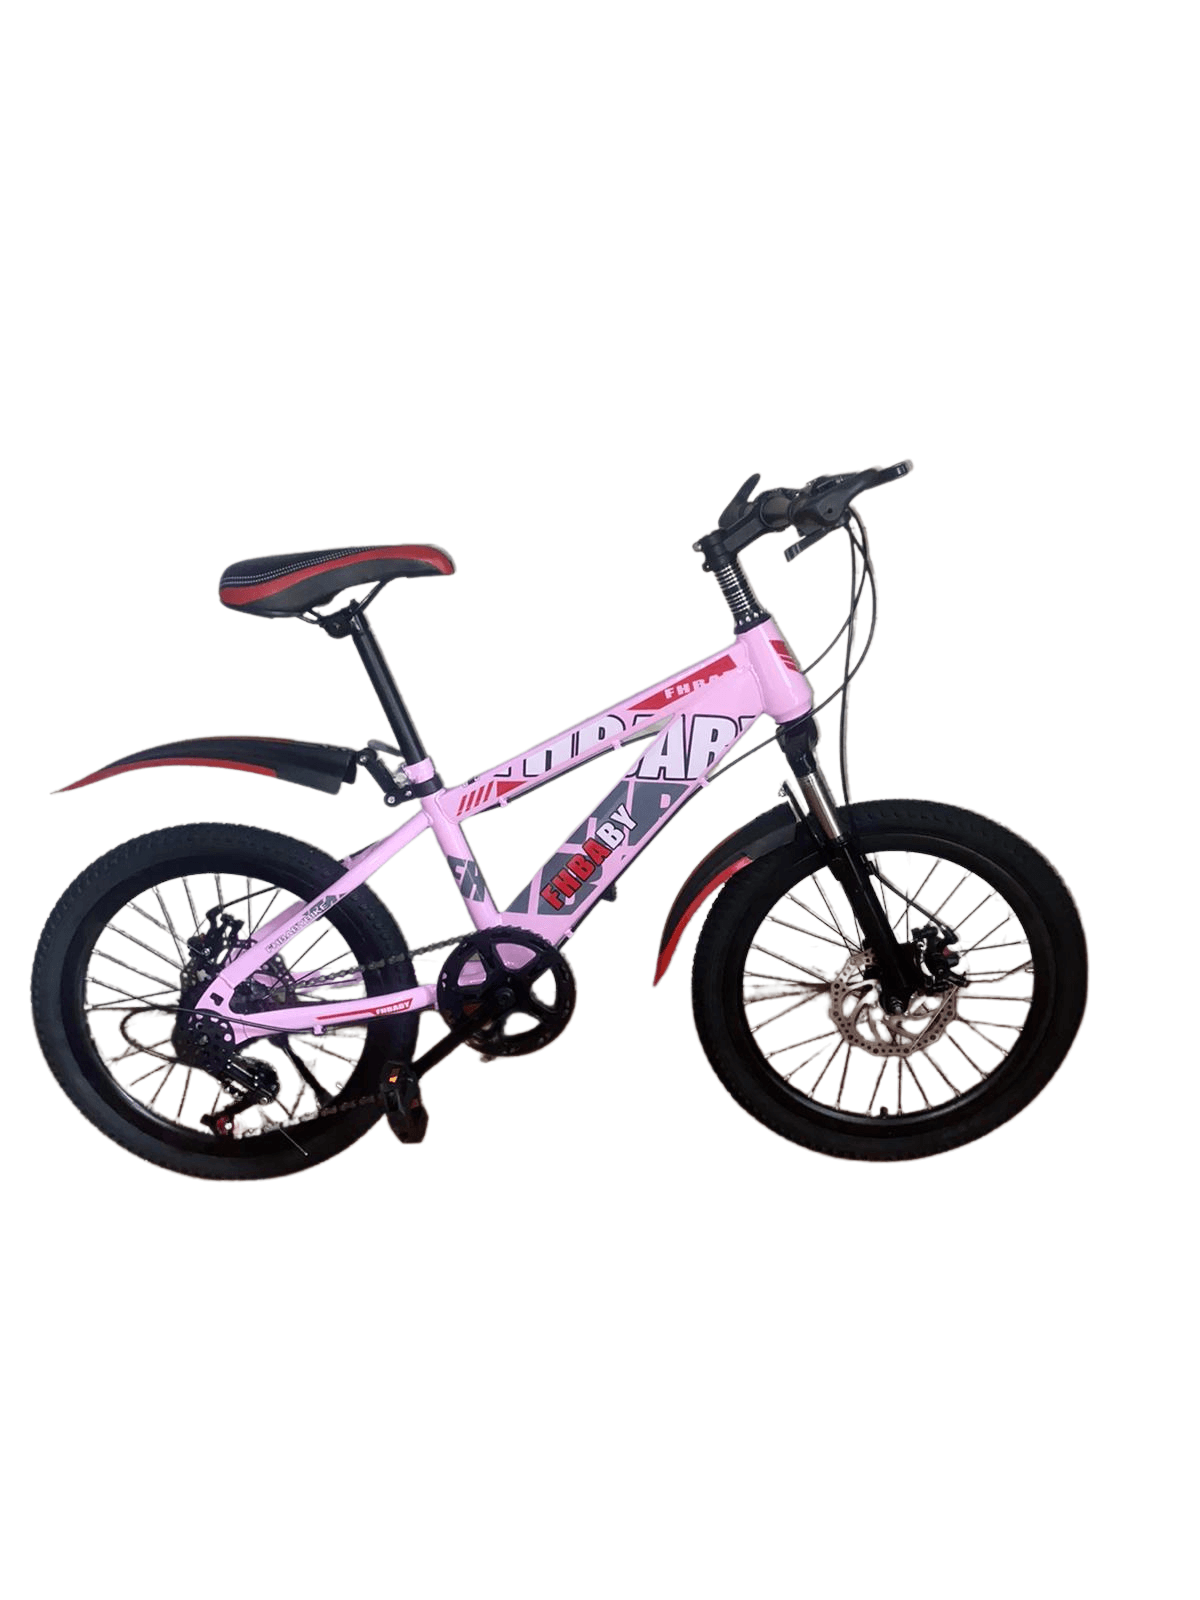 Bicicleta Go Kart roti 20 inch ,frana pe disc,7 viteze,pentru copii 7-10 ani, culoare roz